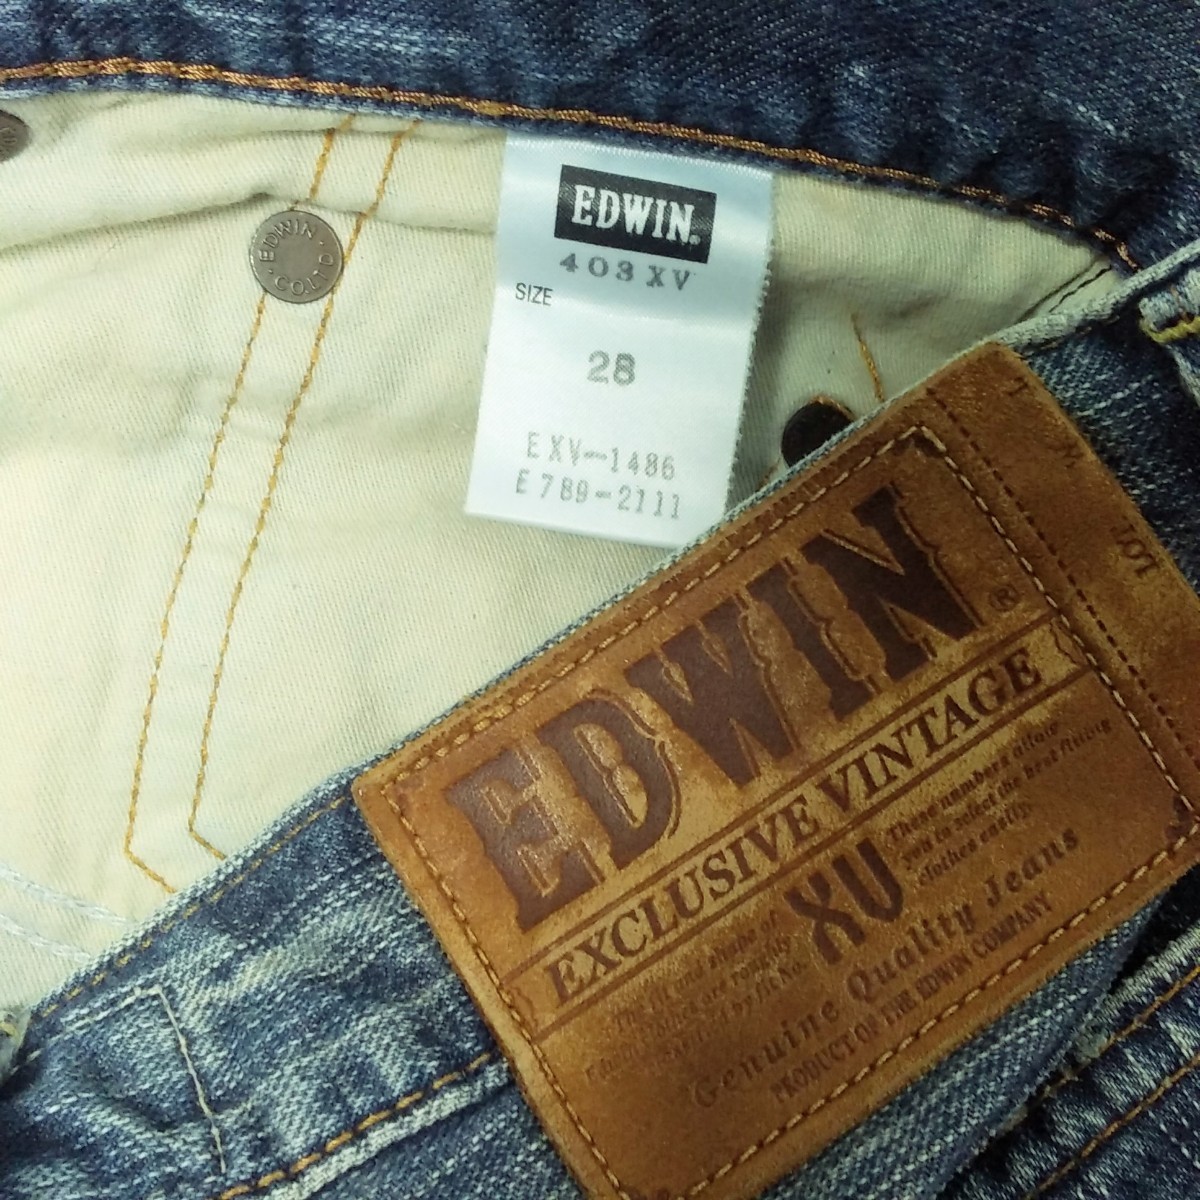 EDWIN 403XV ジップフライ/ダメージ加工デザインジーンズ デニムパンツ(28)_画像3